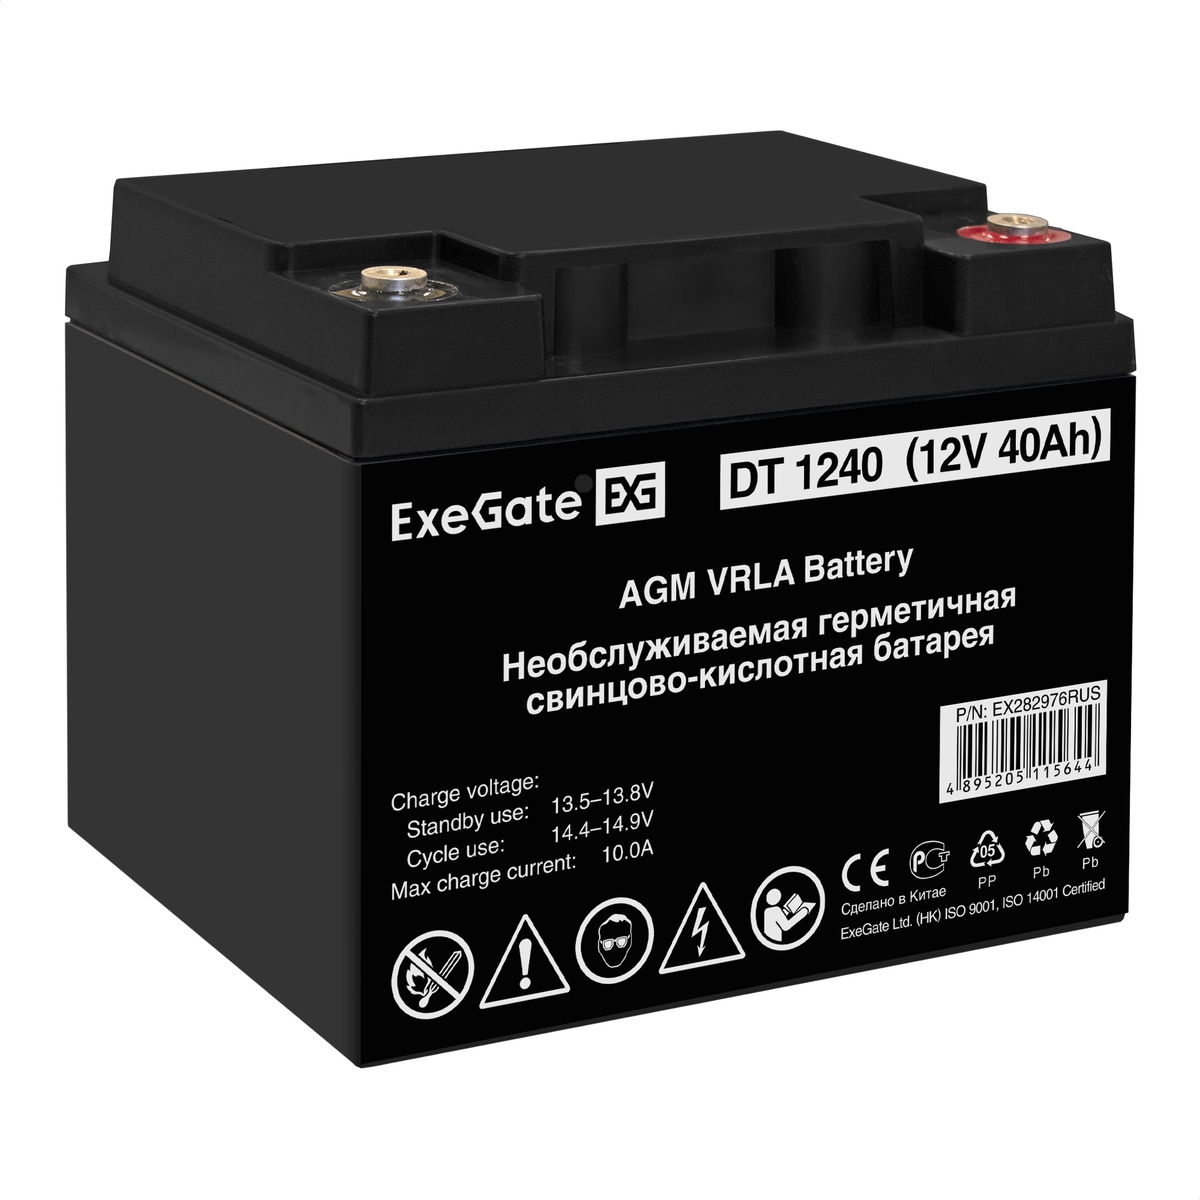 UPS set EX296004 + battery 40Ah EX282976 4 piece